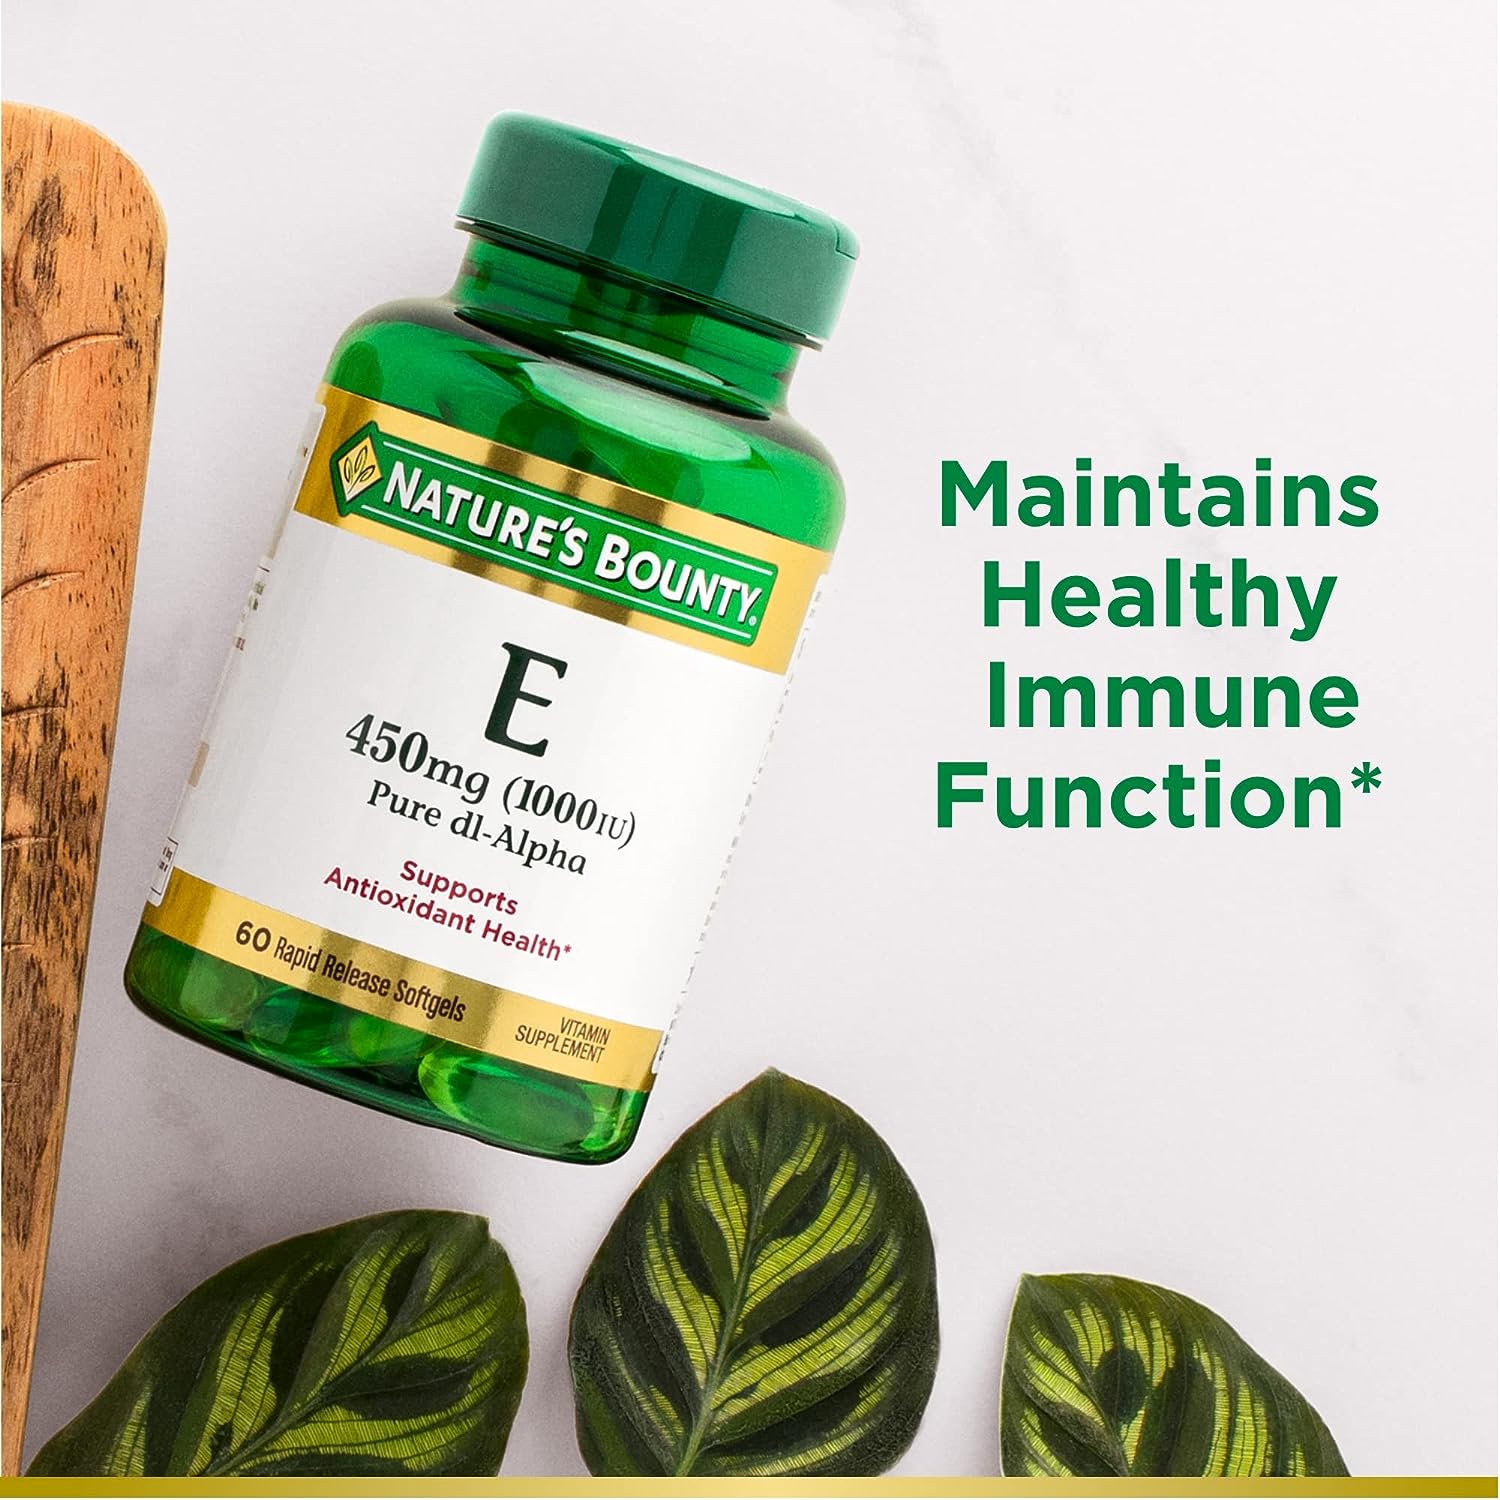 Nature’s Bounty Vitamin E 1000 IU Softgels, Supports Antioxidant Health & Immune System, 60 Softgels